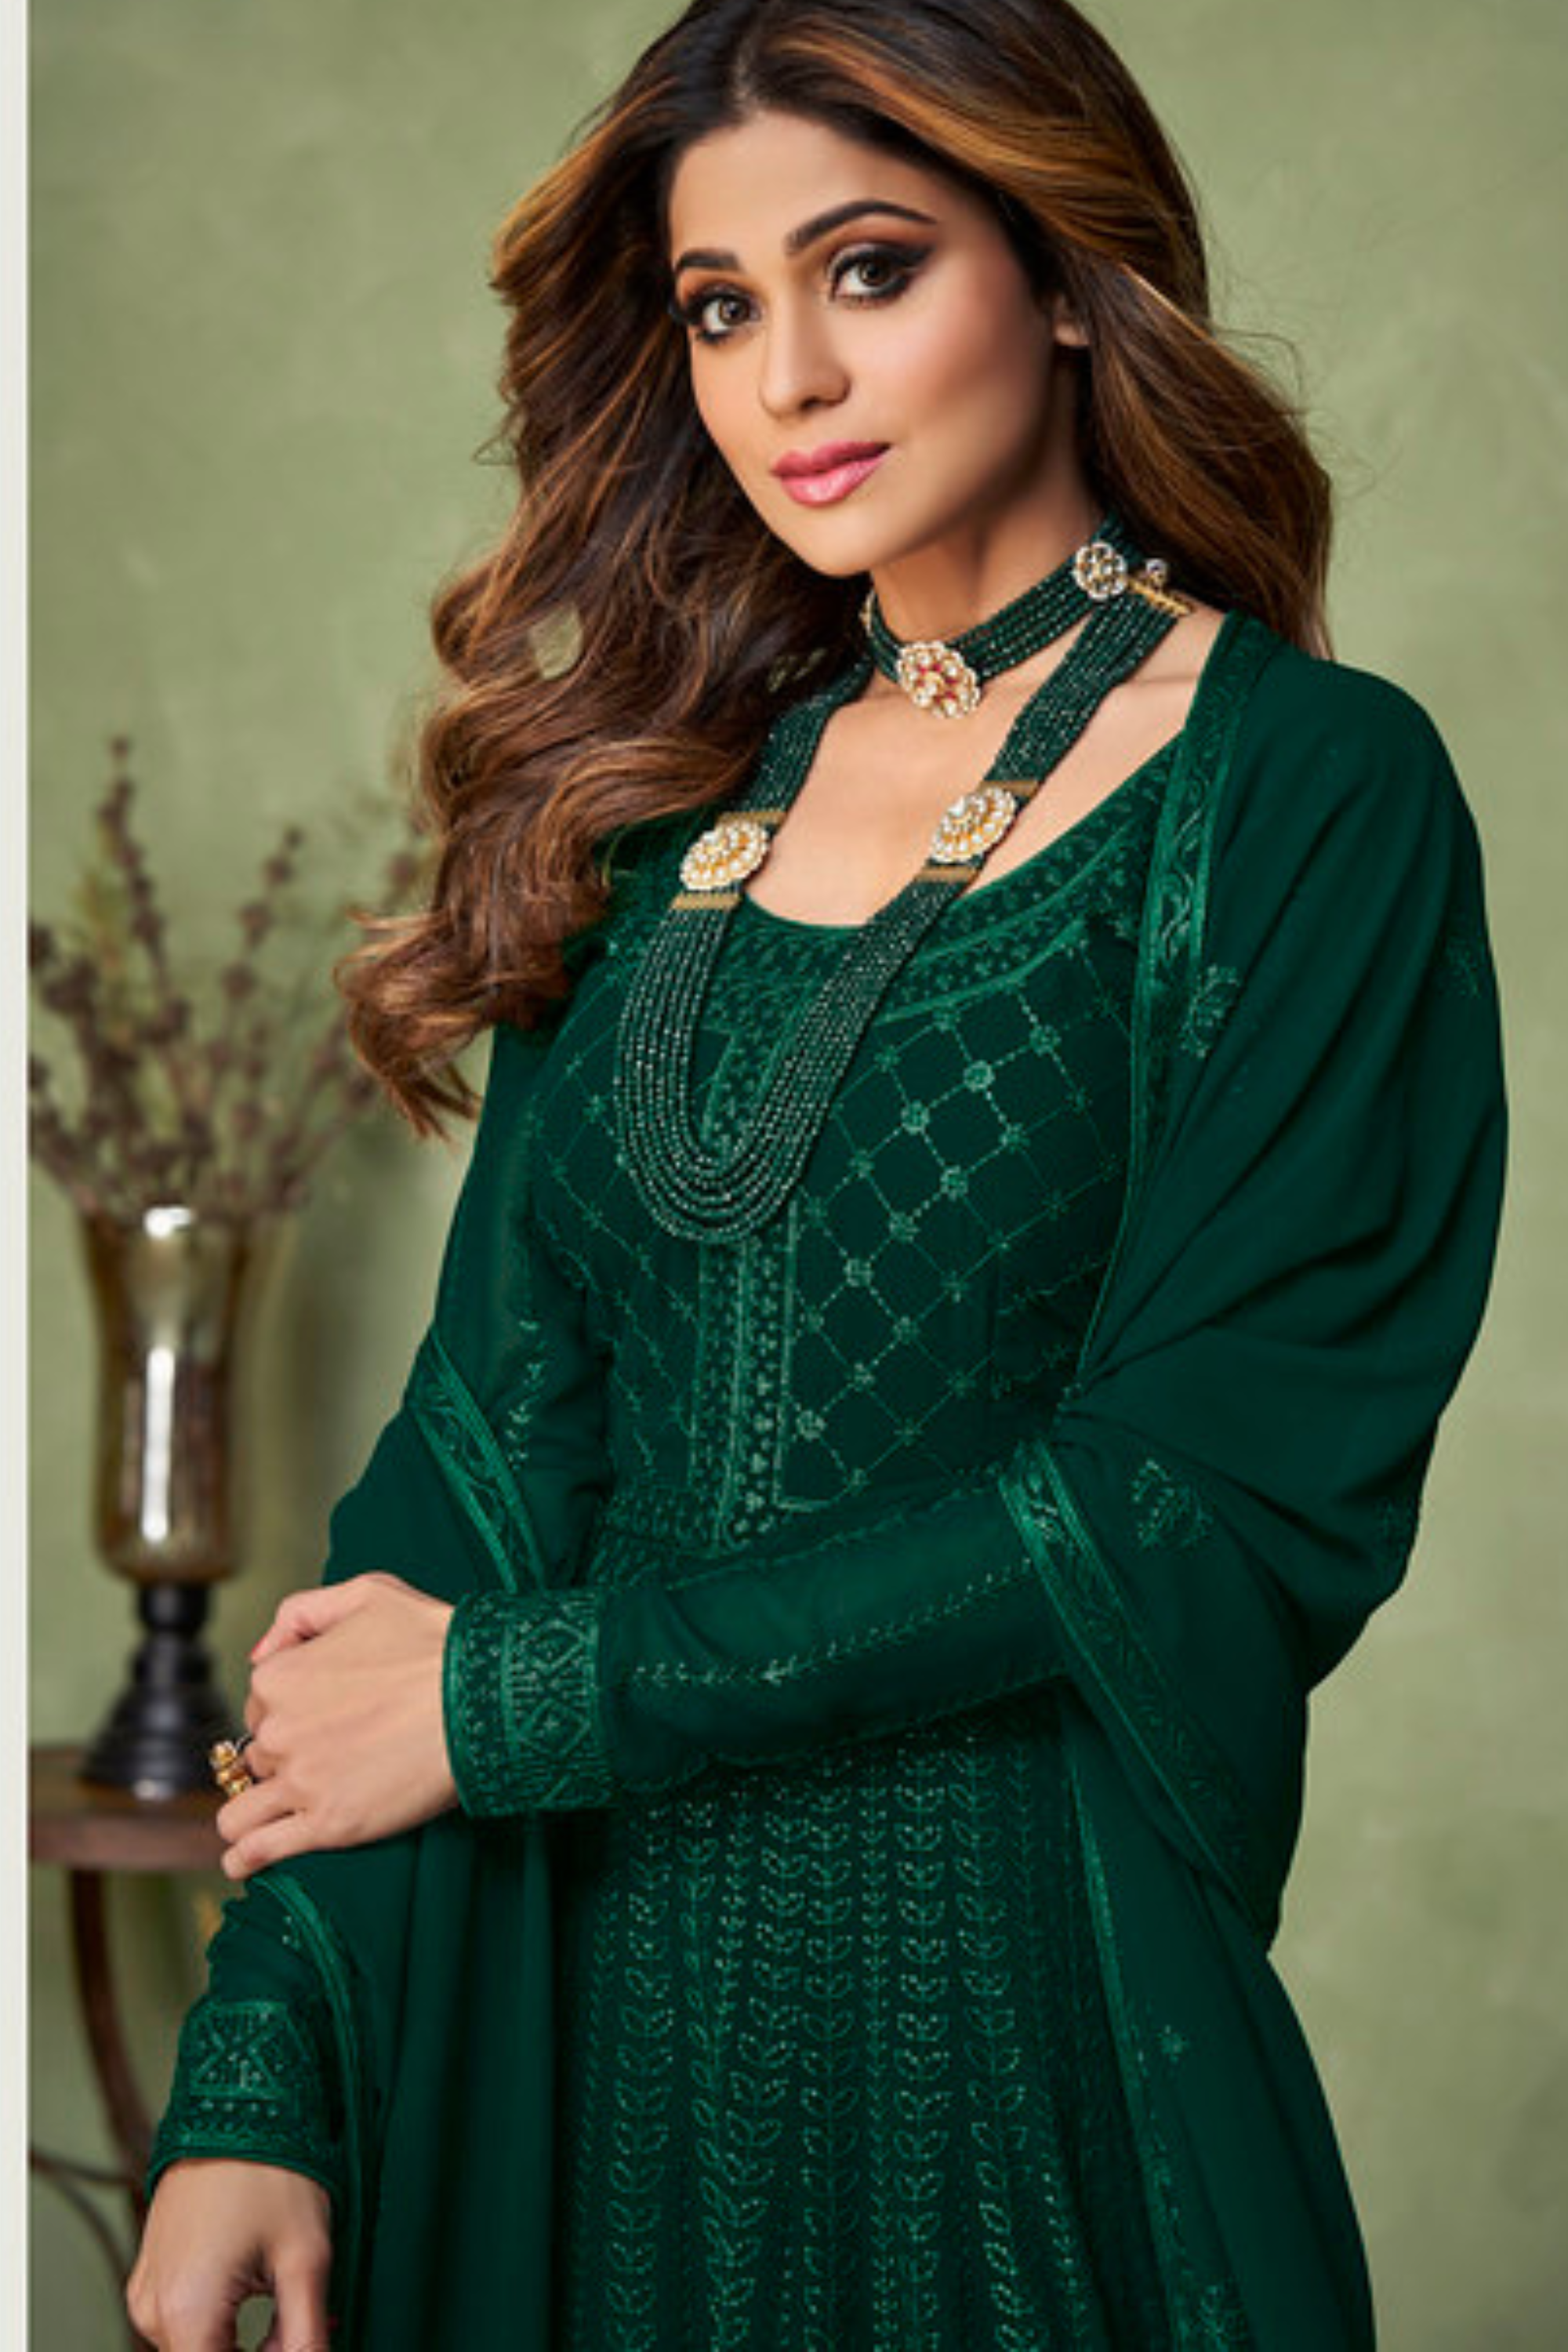 Buy Morgana alter Ego Emerald and Black Wedding Dress / Alternative Bride Bridal  Gown / Forest Green Wedding Gown / Dark Green Wedding Dress Online in India  - Etsy